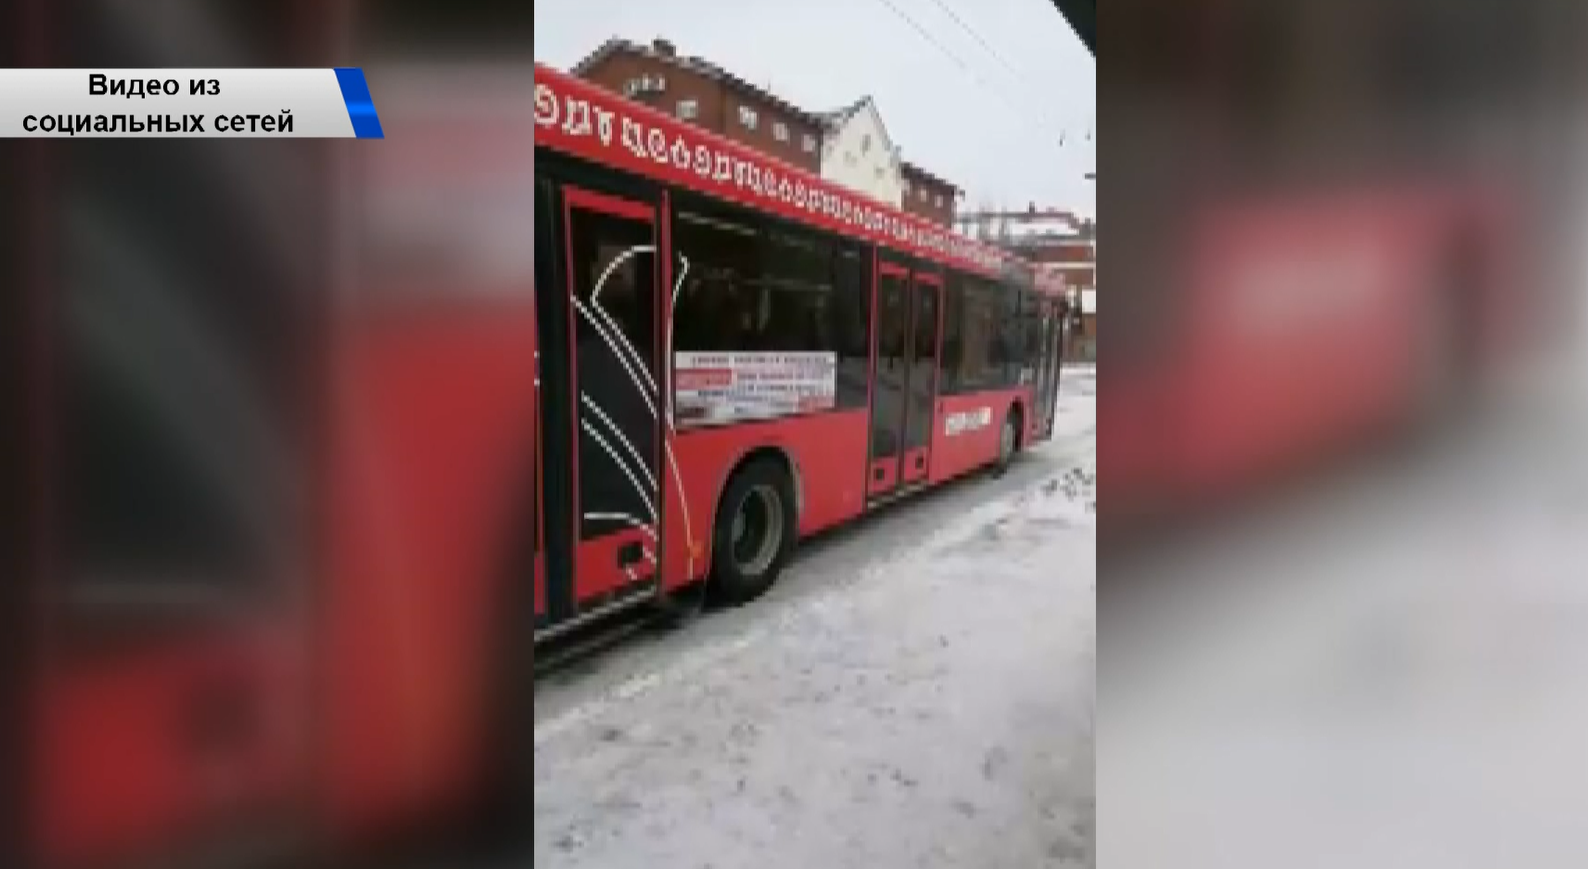 Автобус отъезжает от остановки. 109с автобус Казань как выглядит. 89 автобус казань расписание маршрута